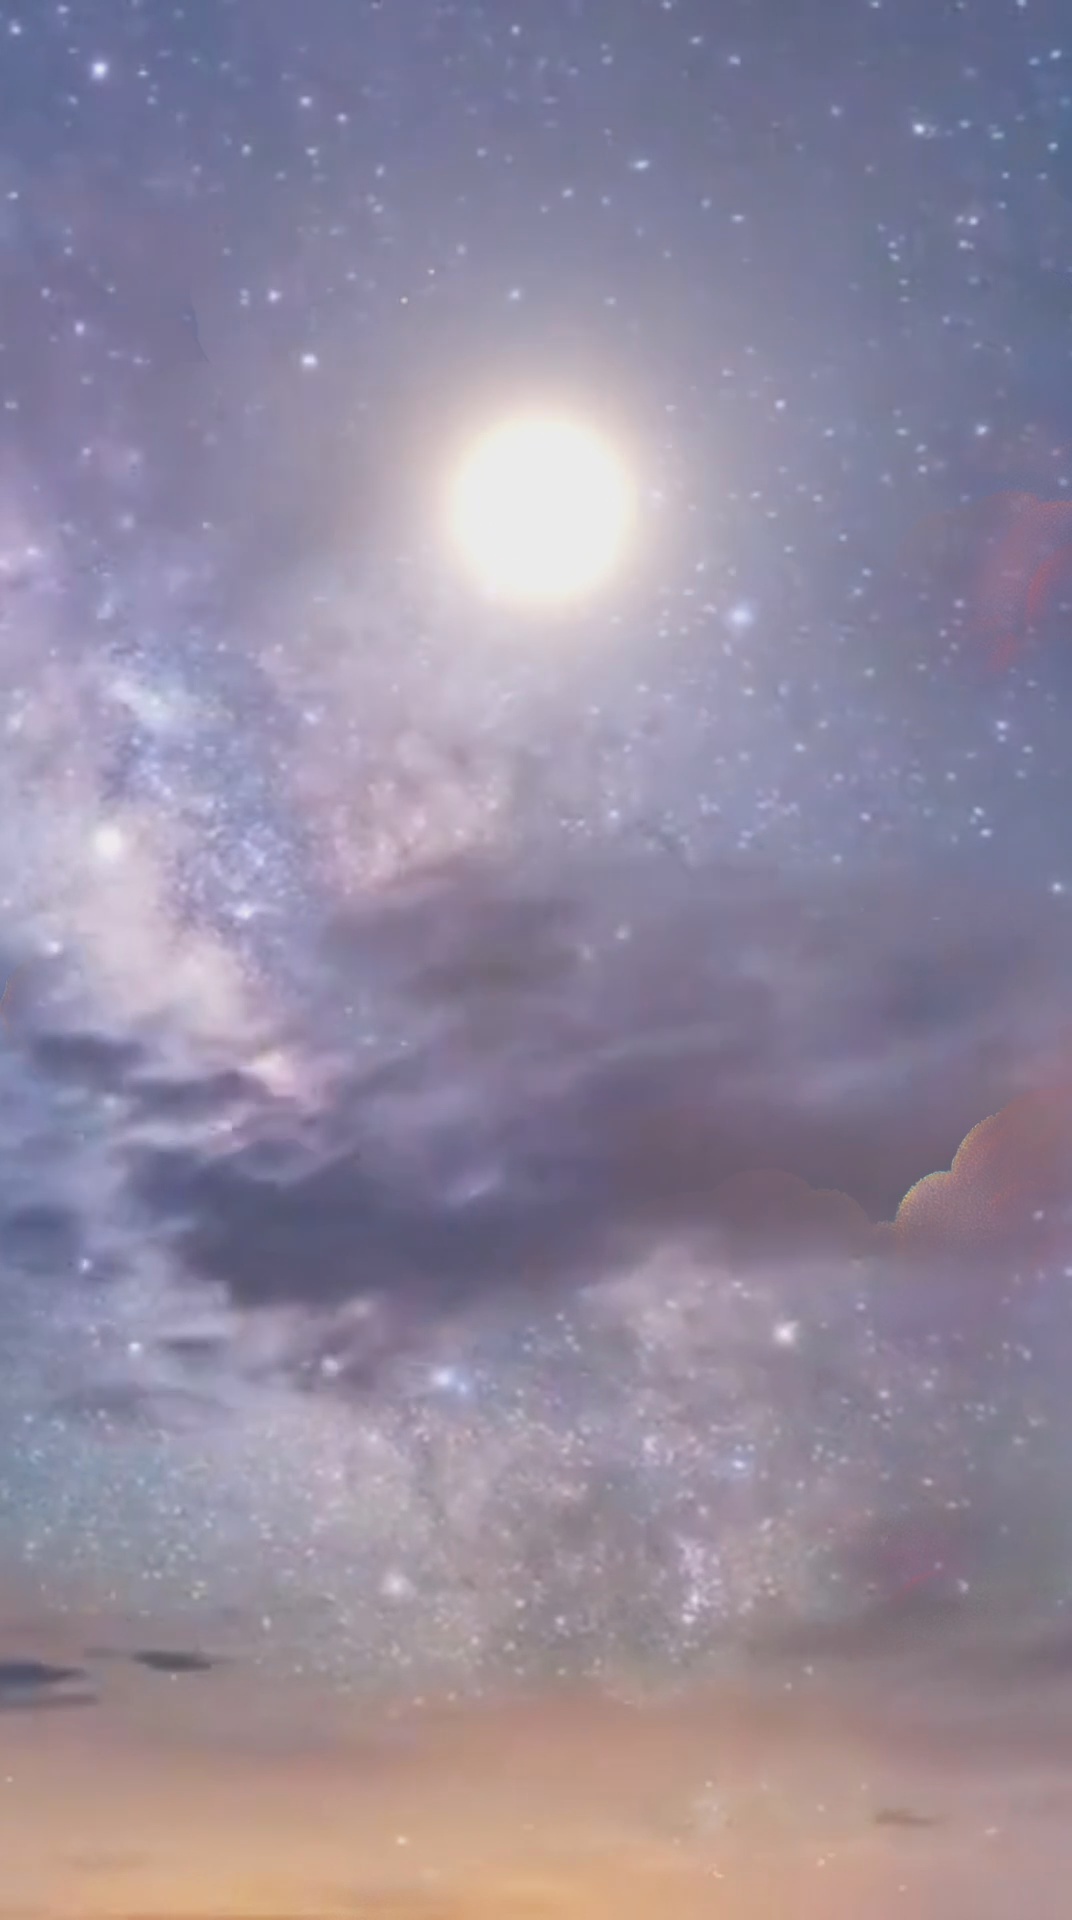 ISS-Video-Cosmic-Sky